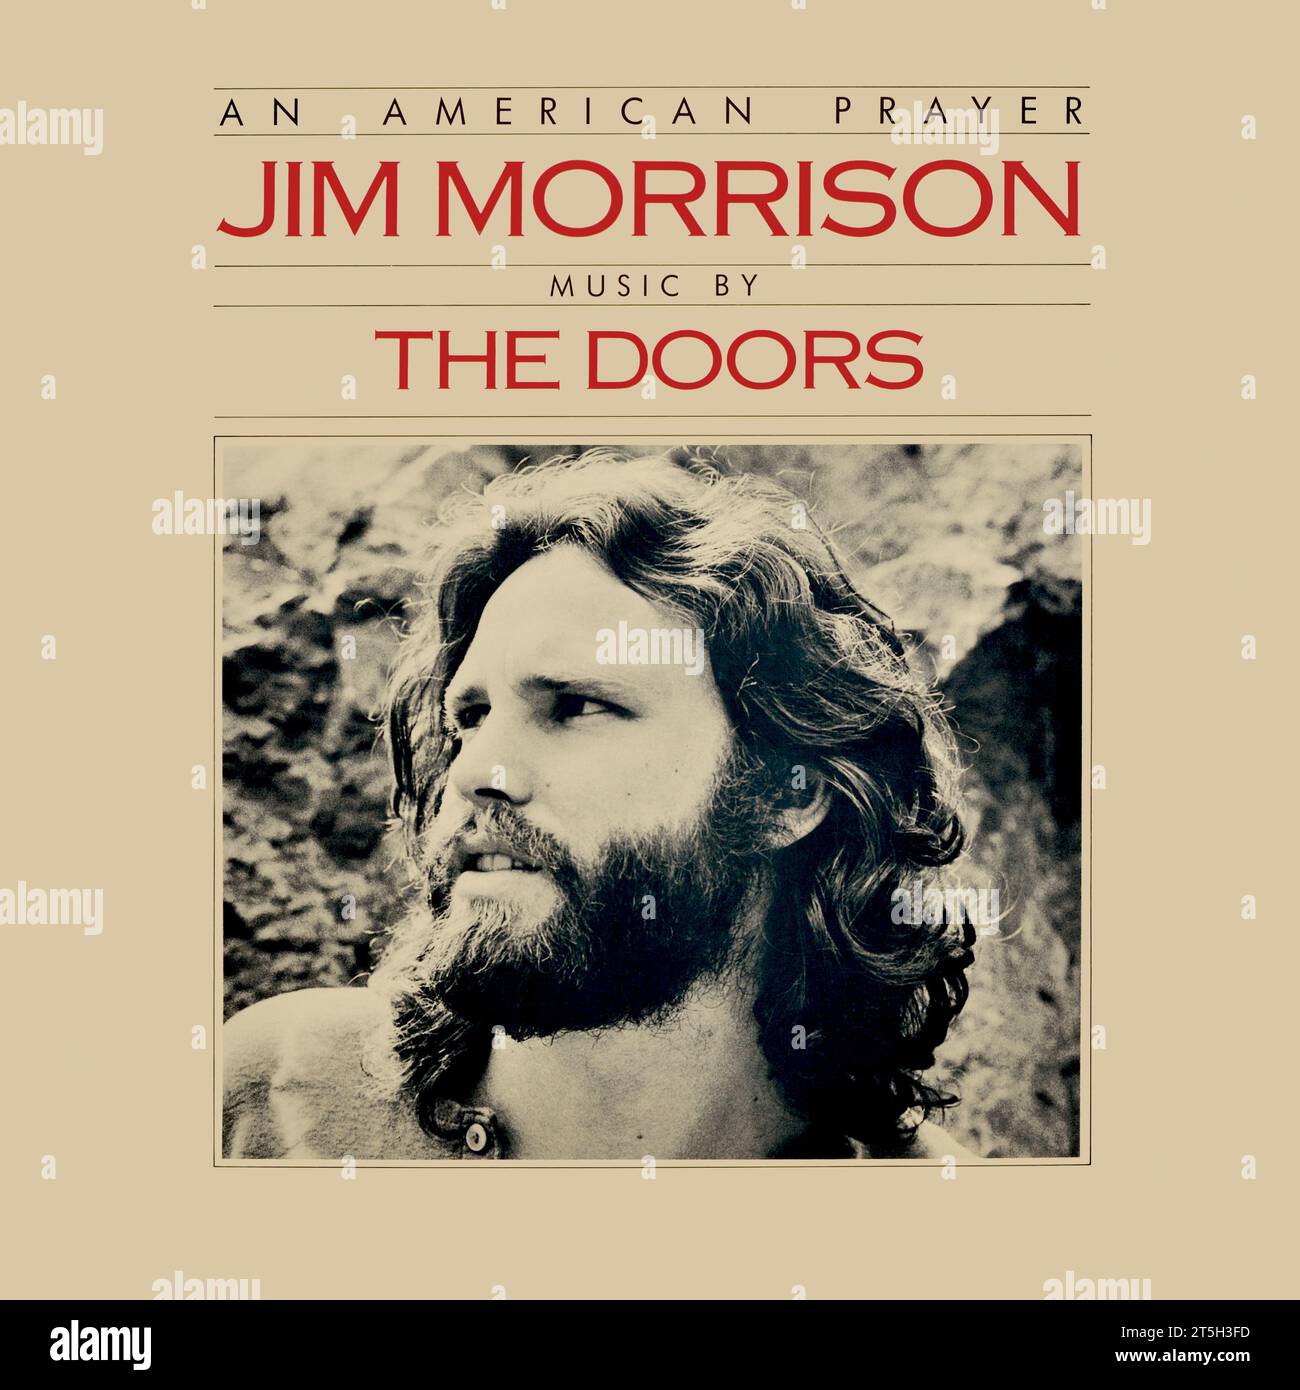 Jim Morrison, The Doors - original vinyl album cover - An American Prayer - 1978 Stock Photo